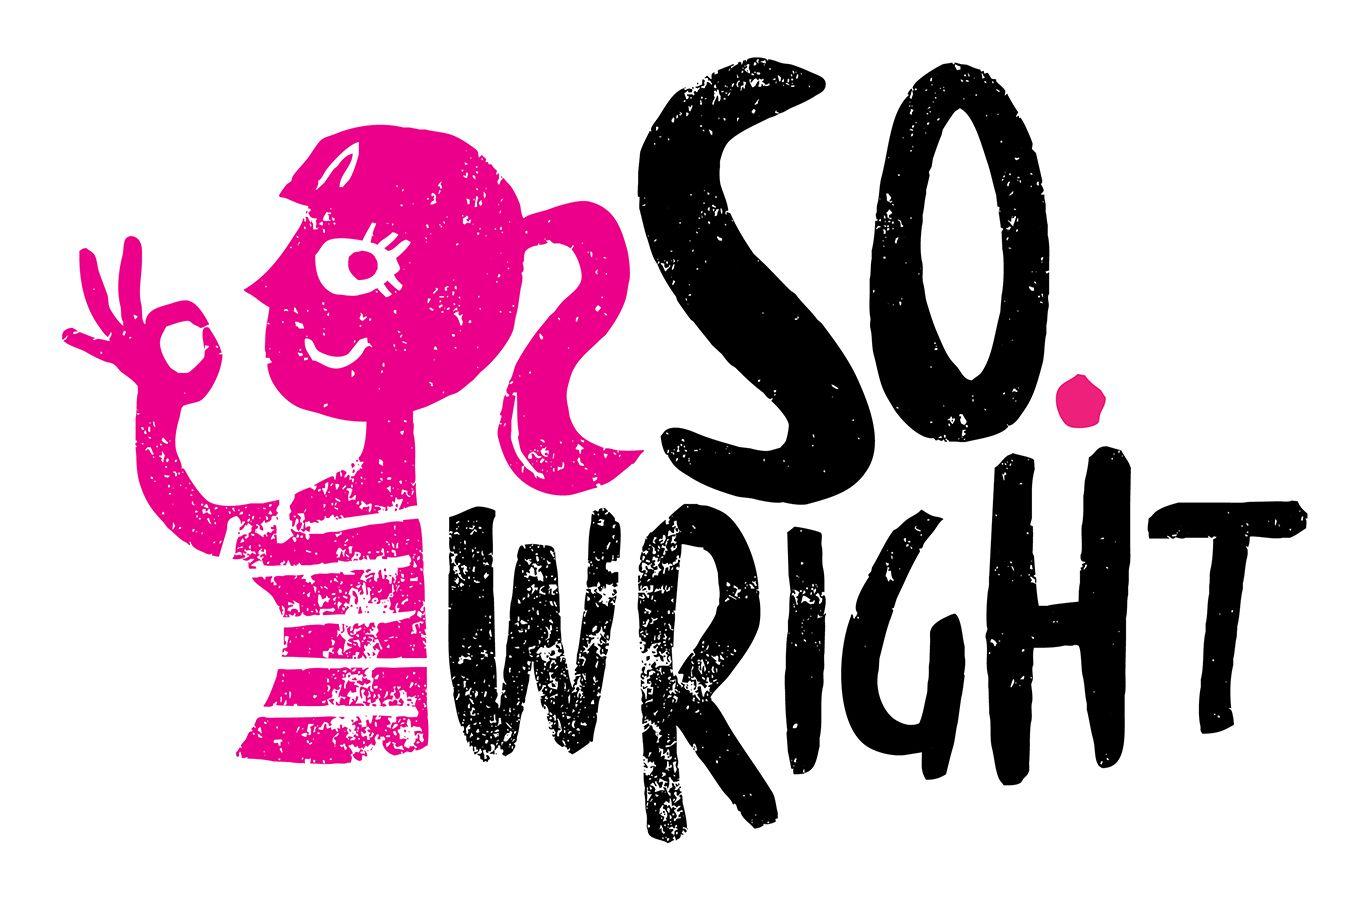 Presenter Logo - So. Wright. Paul Burgess Graphic Design